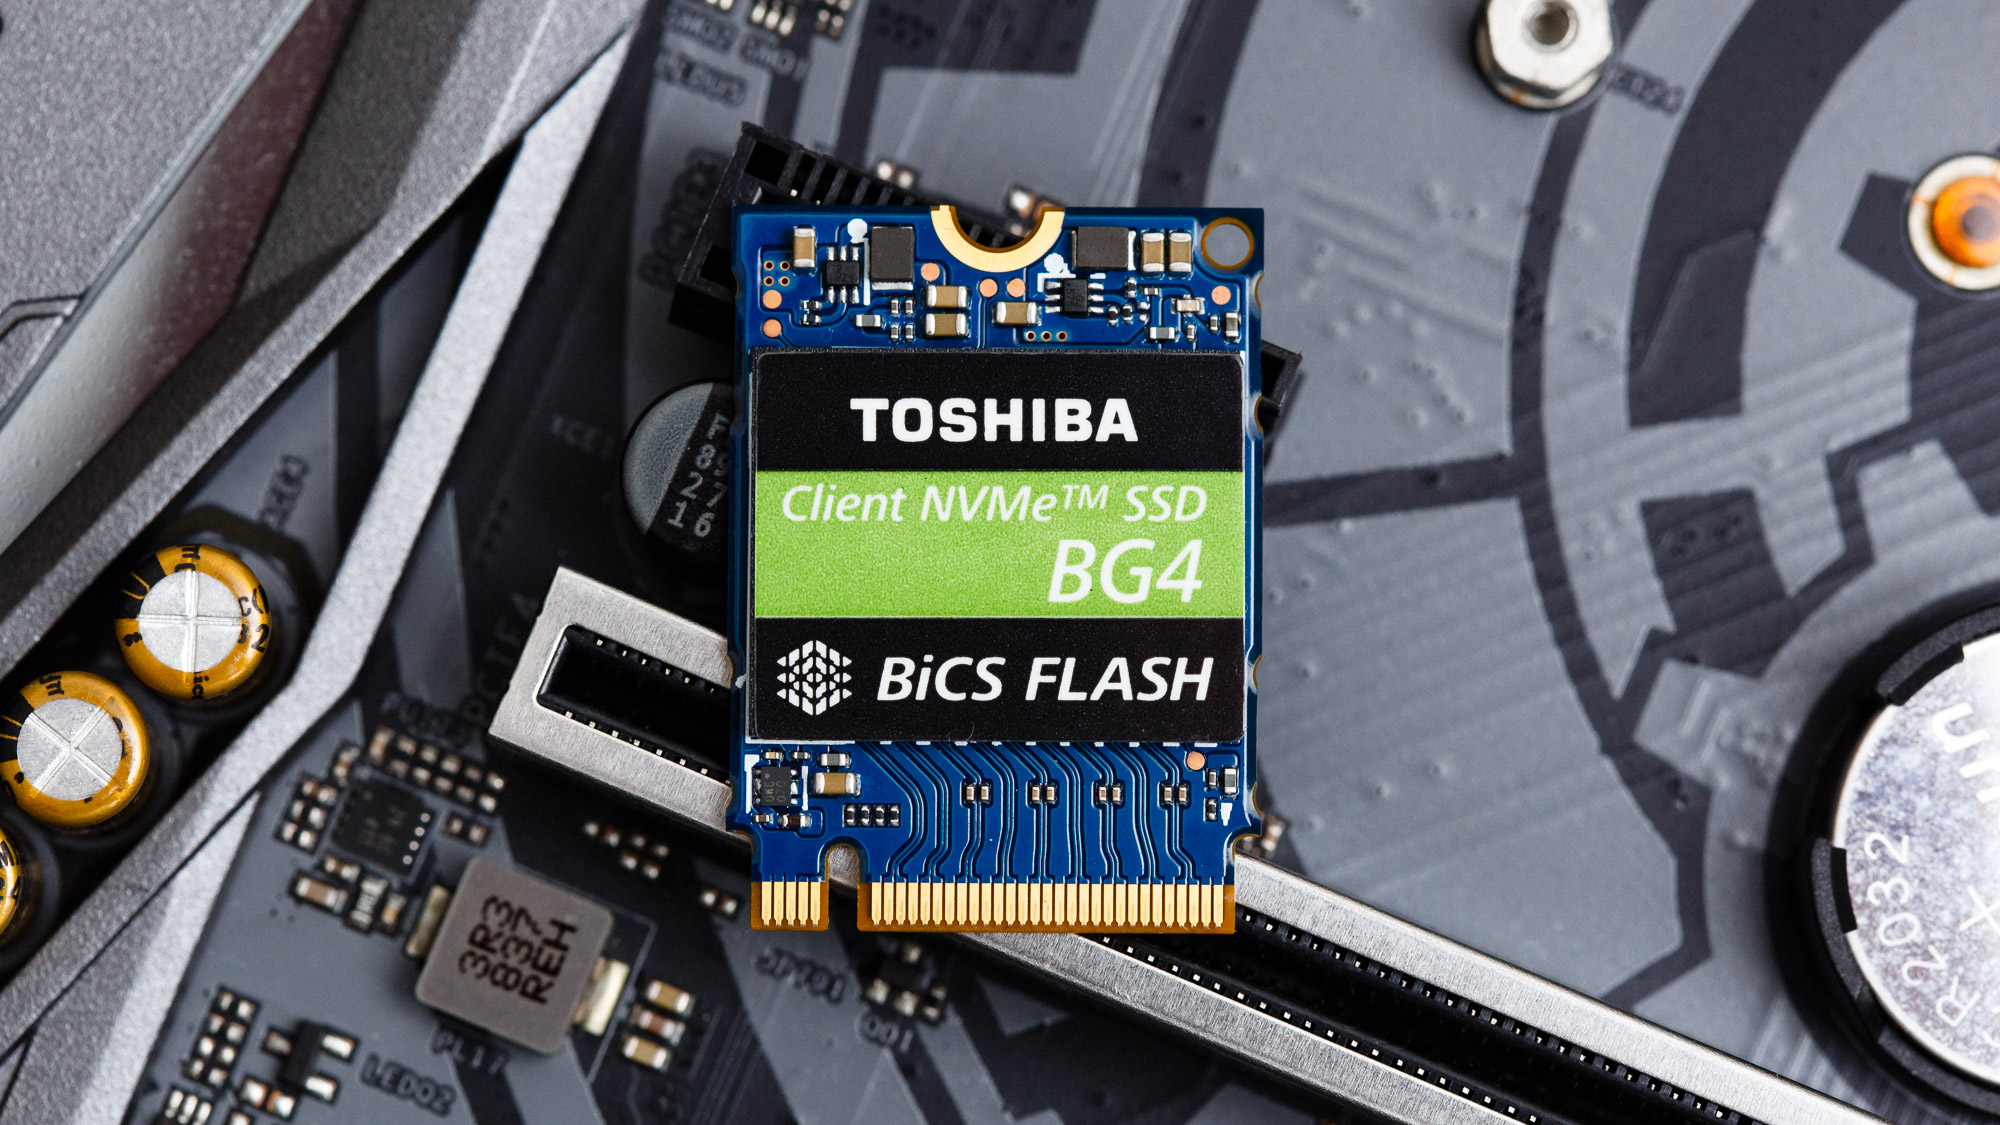 Toshiba BG4 M.2 SSD Review: One Tiny, But SSD - Tom's Hardware | Tom's Hardware